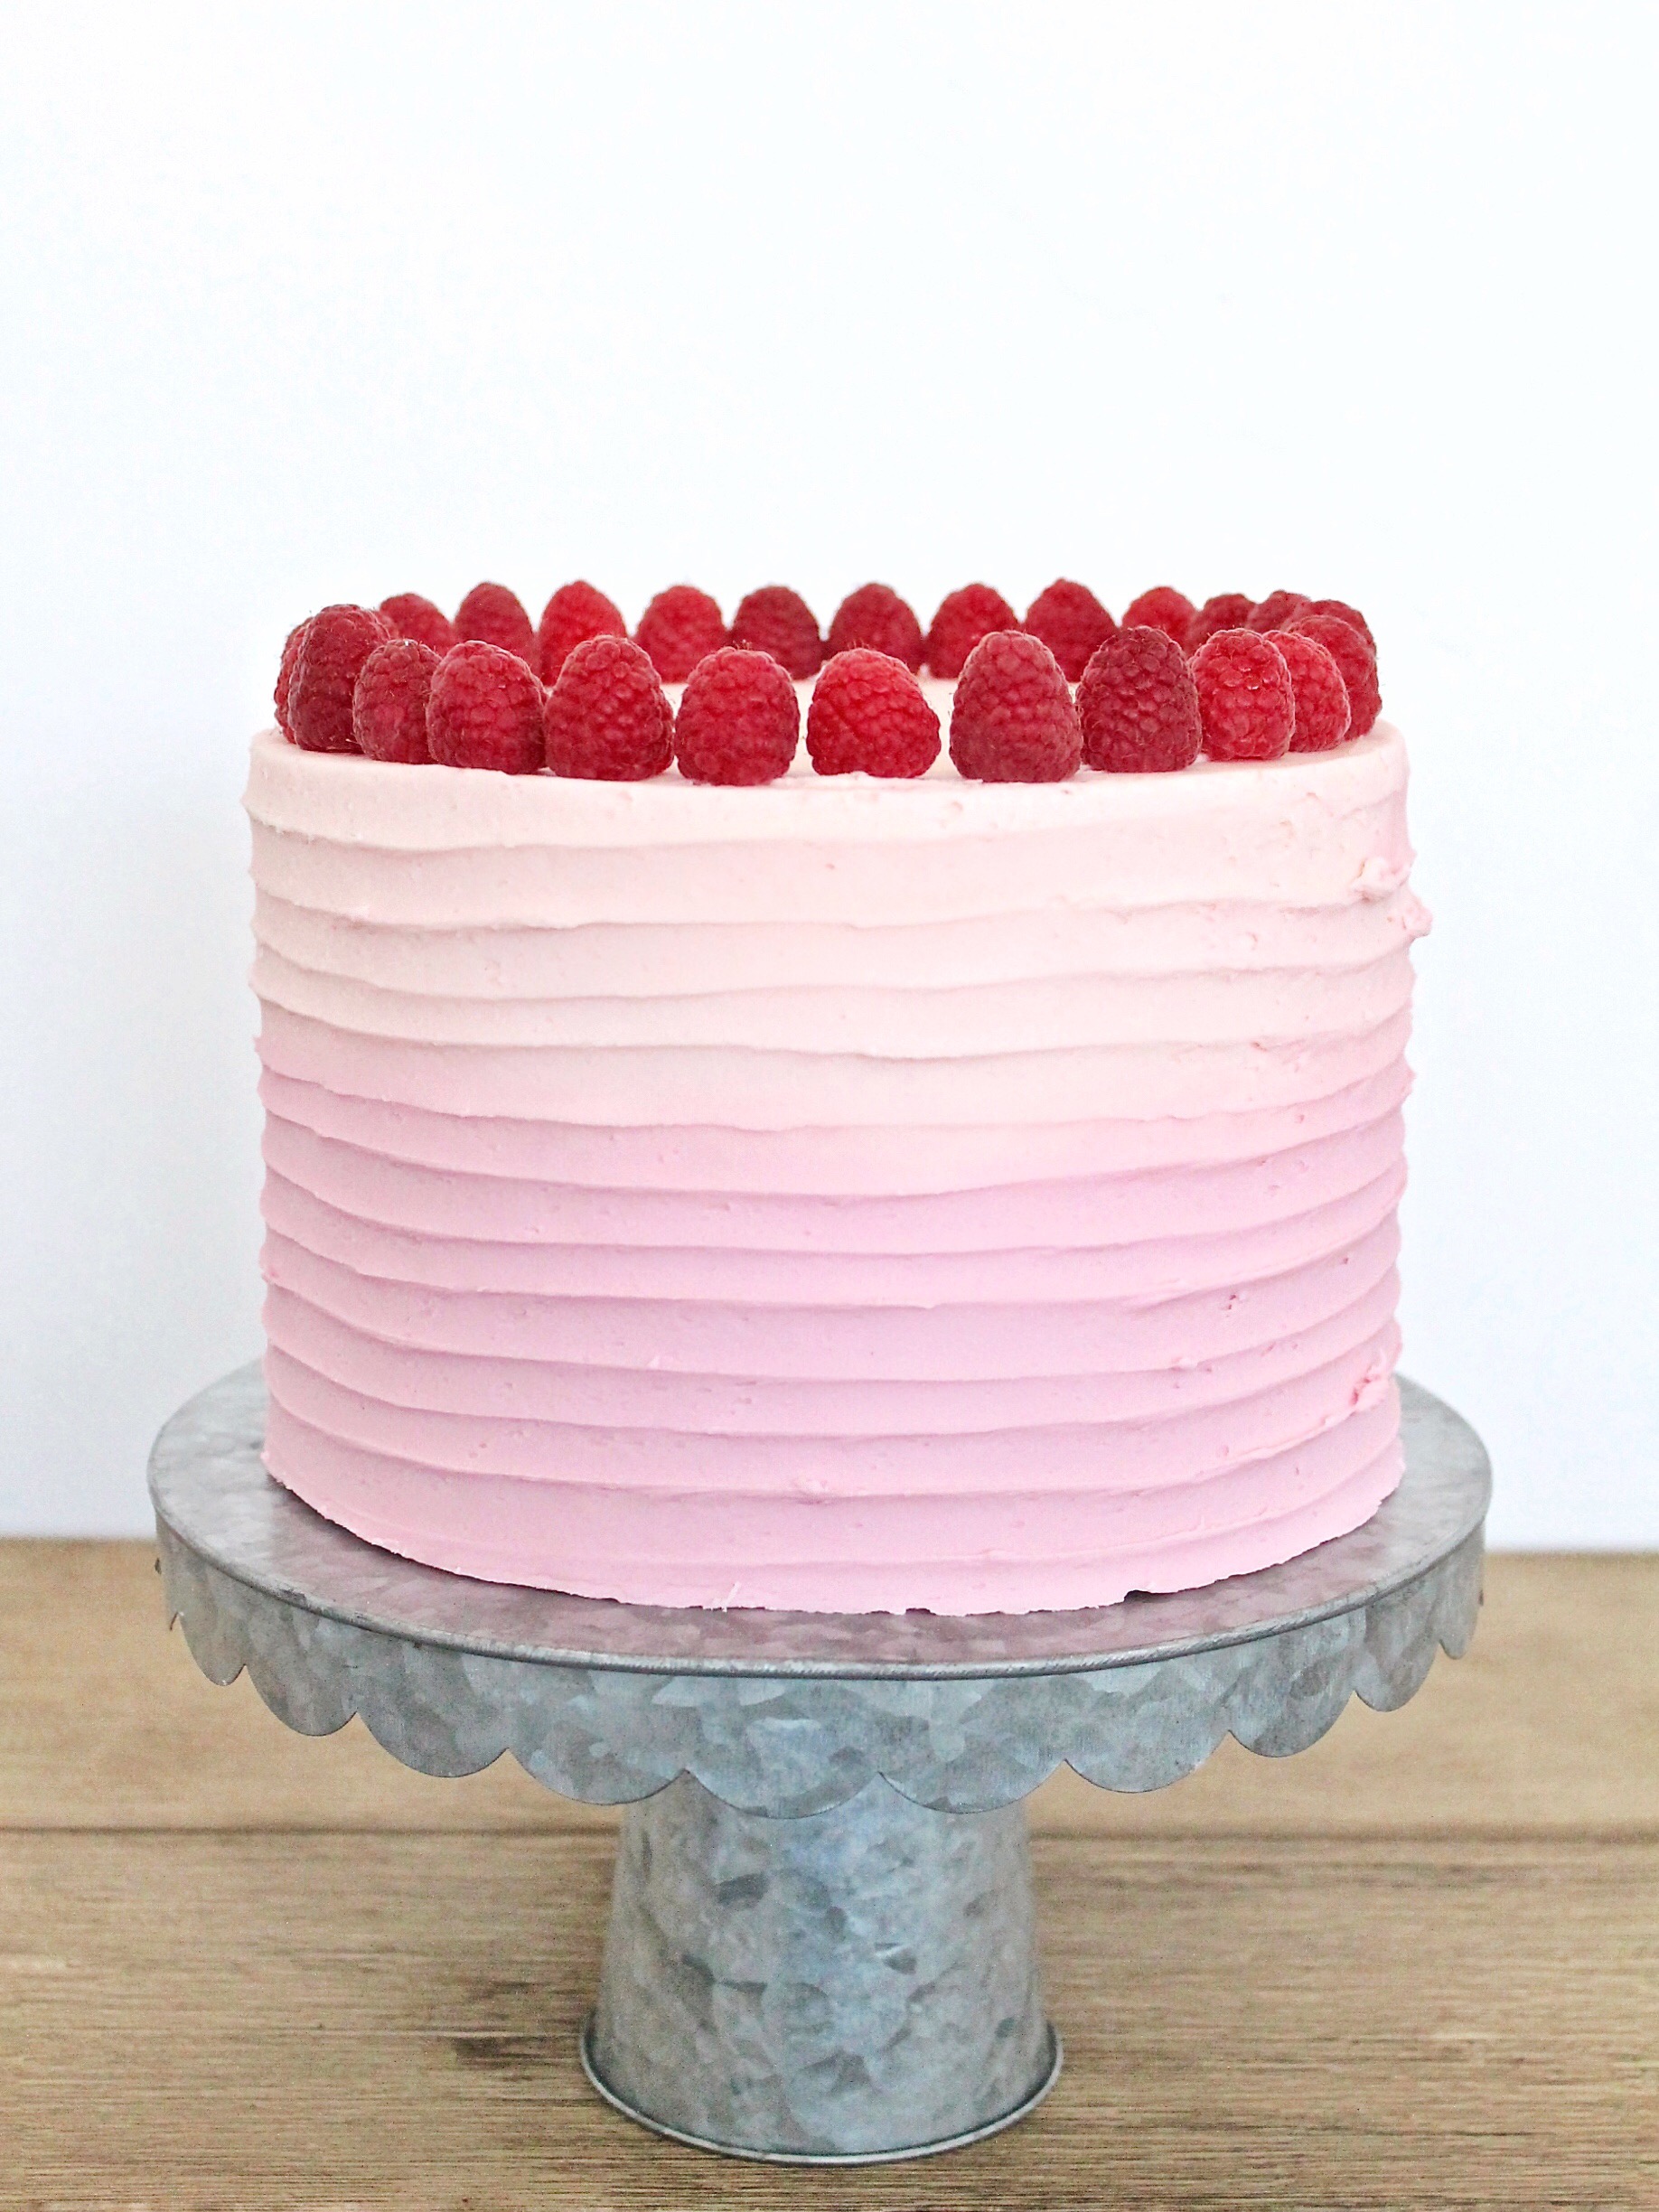 tips to make a pink velvet cake with raspberry buttercream. www.cakebycourtney.com